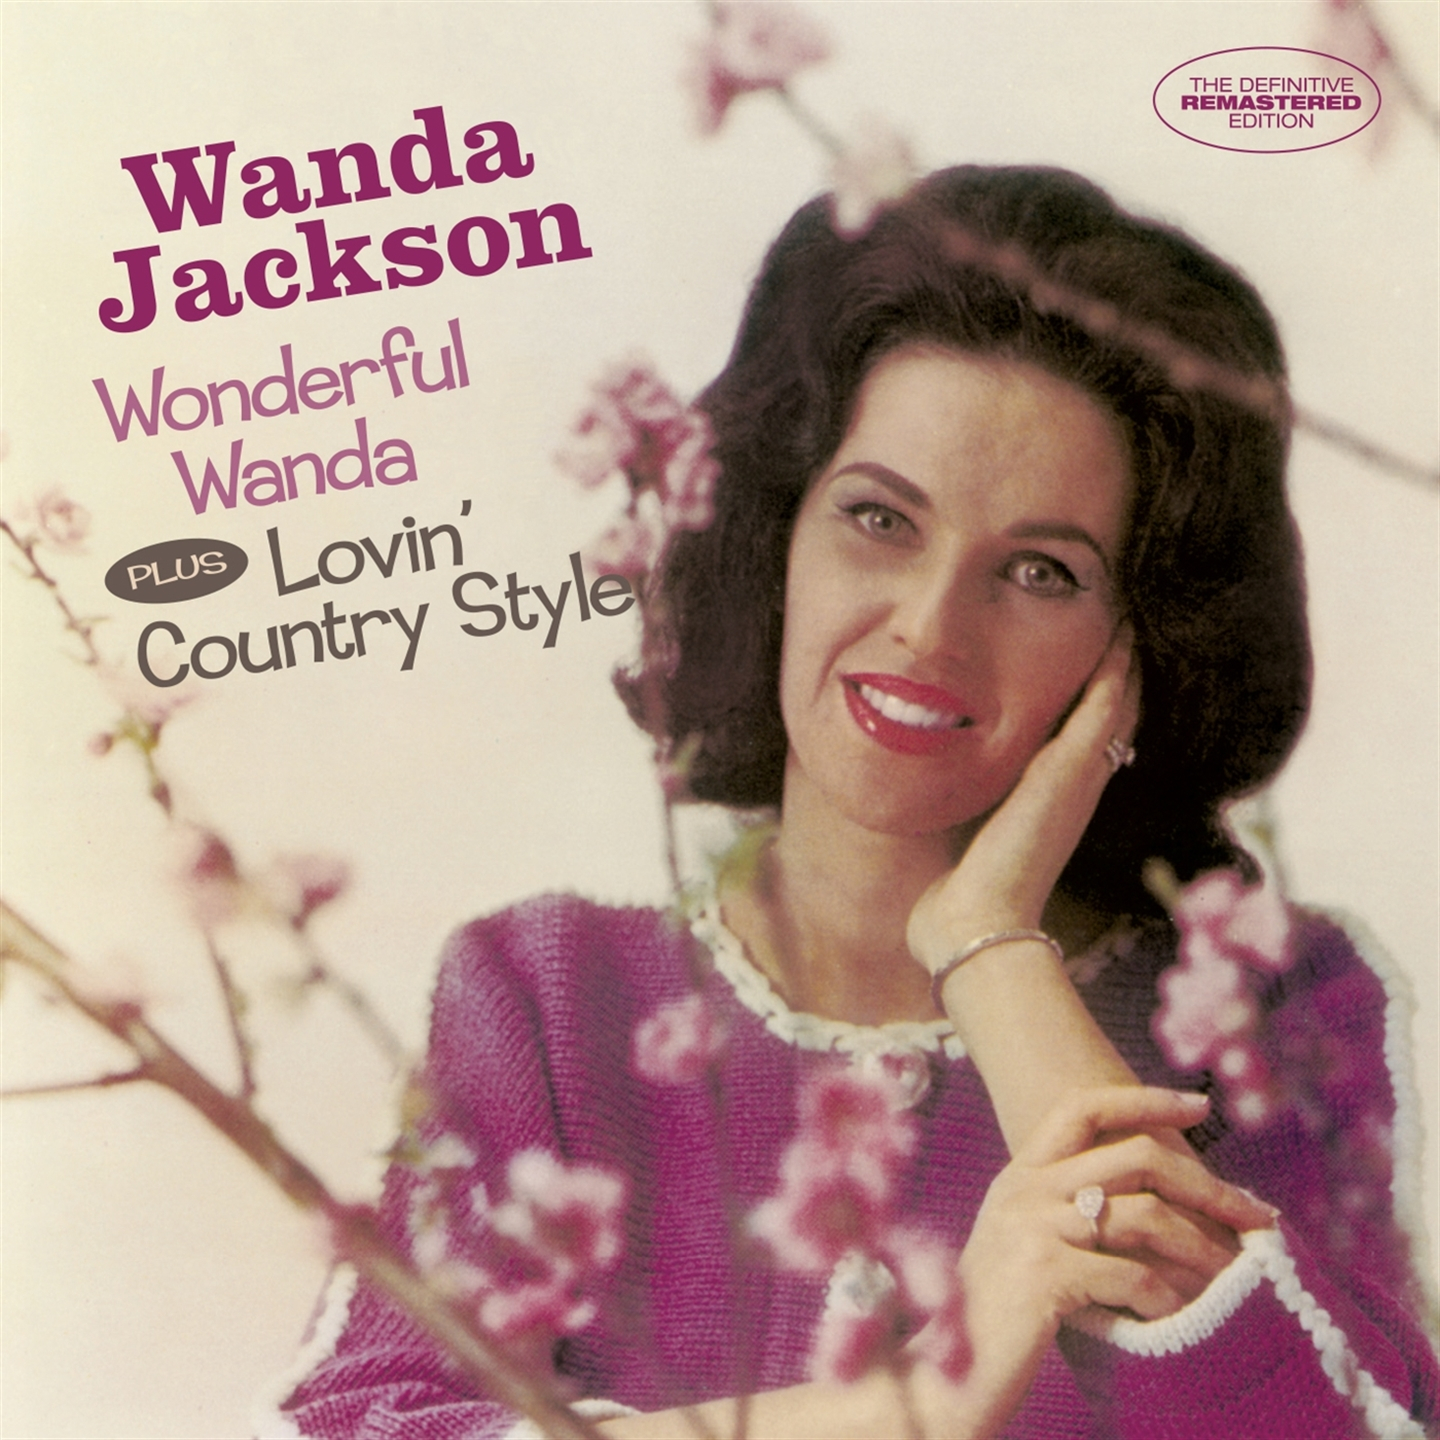 Wanda Jackson - Wonderful Wanda (+ Lovin' Country Style) - Photo 1 sur 1